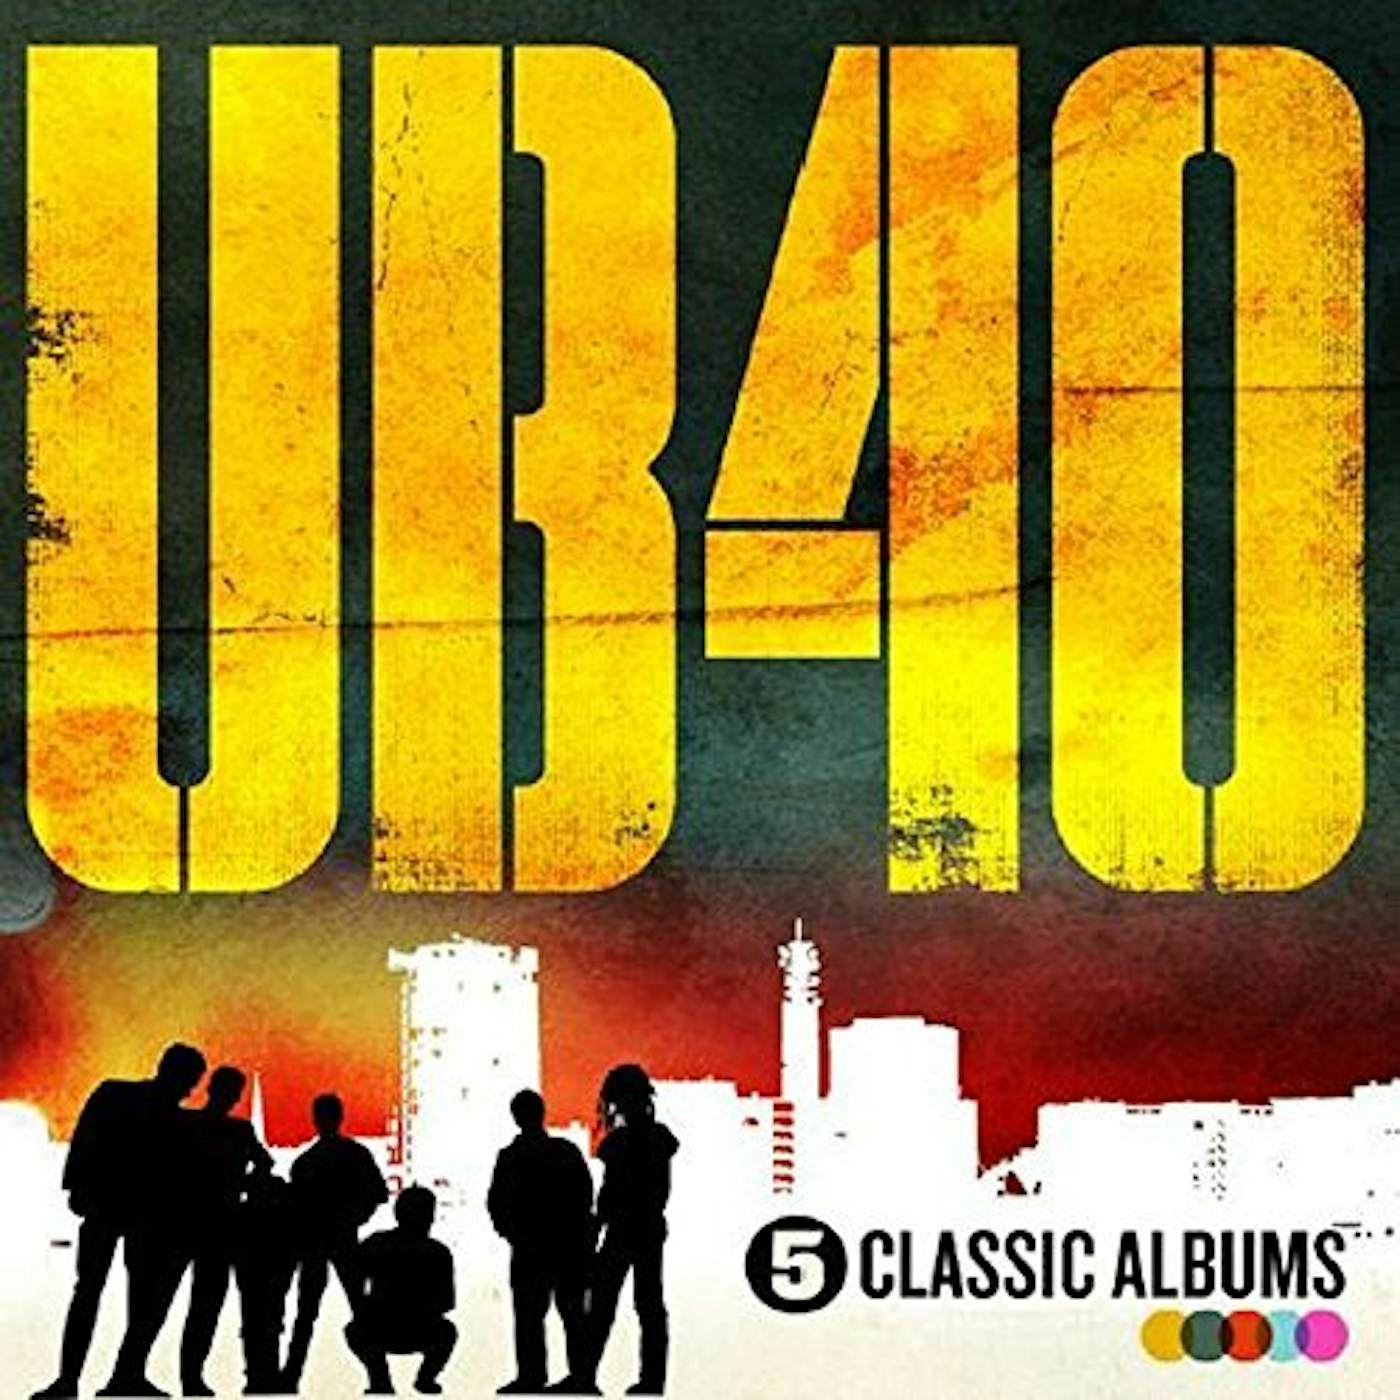 UB40 5 CLASSIC ALBUMS CD